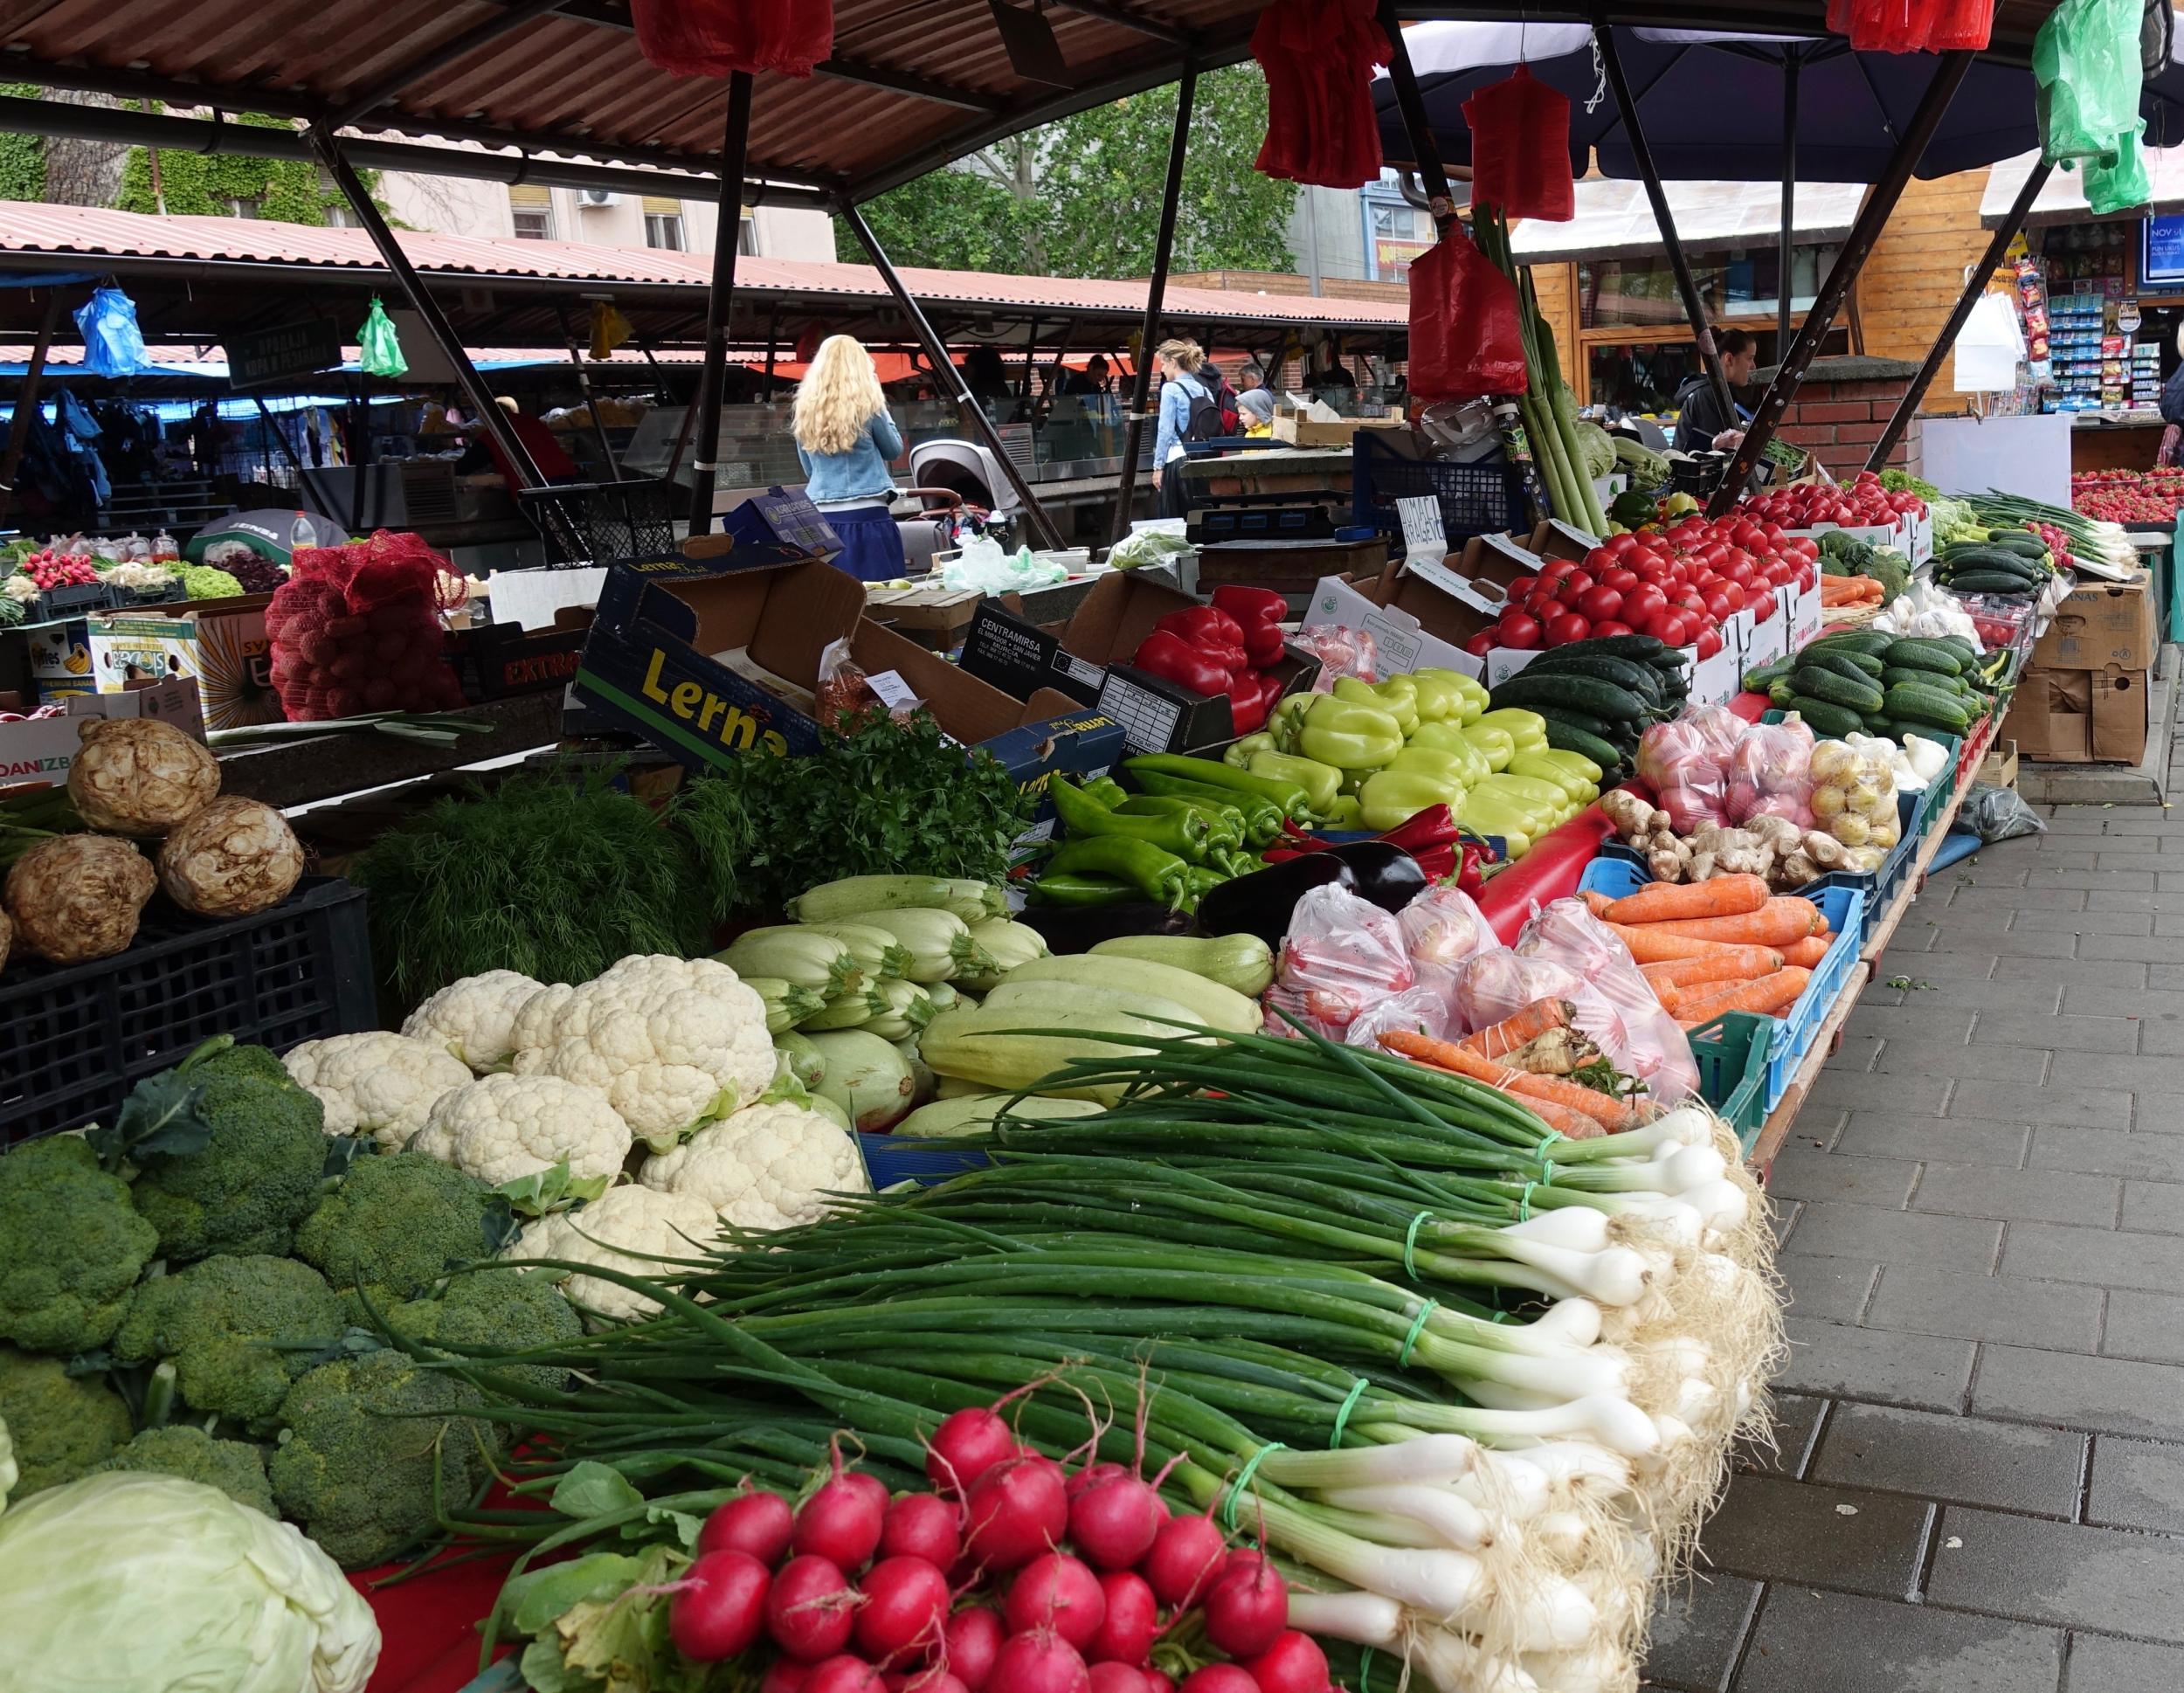 Novi Sad’s fish market also sells fresh produce